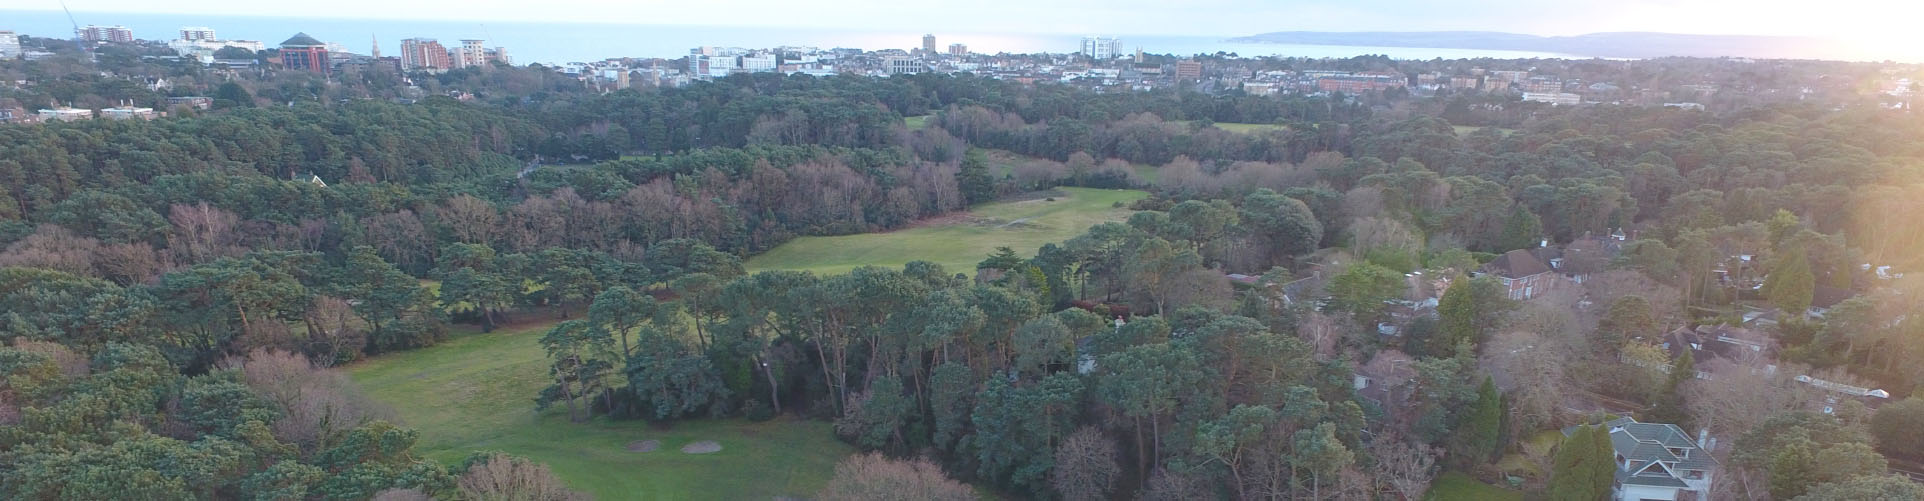 Aerial photo of Meyrick Park, Bournemouth